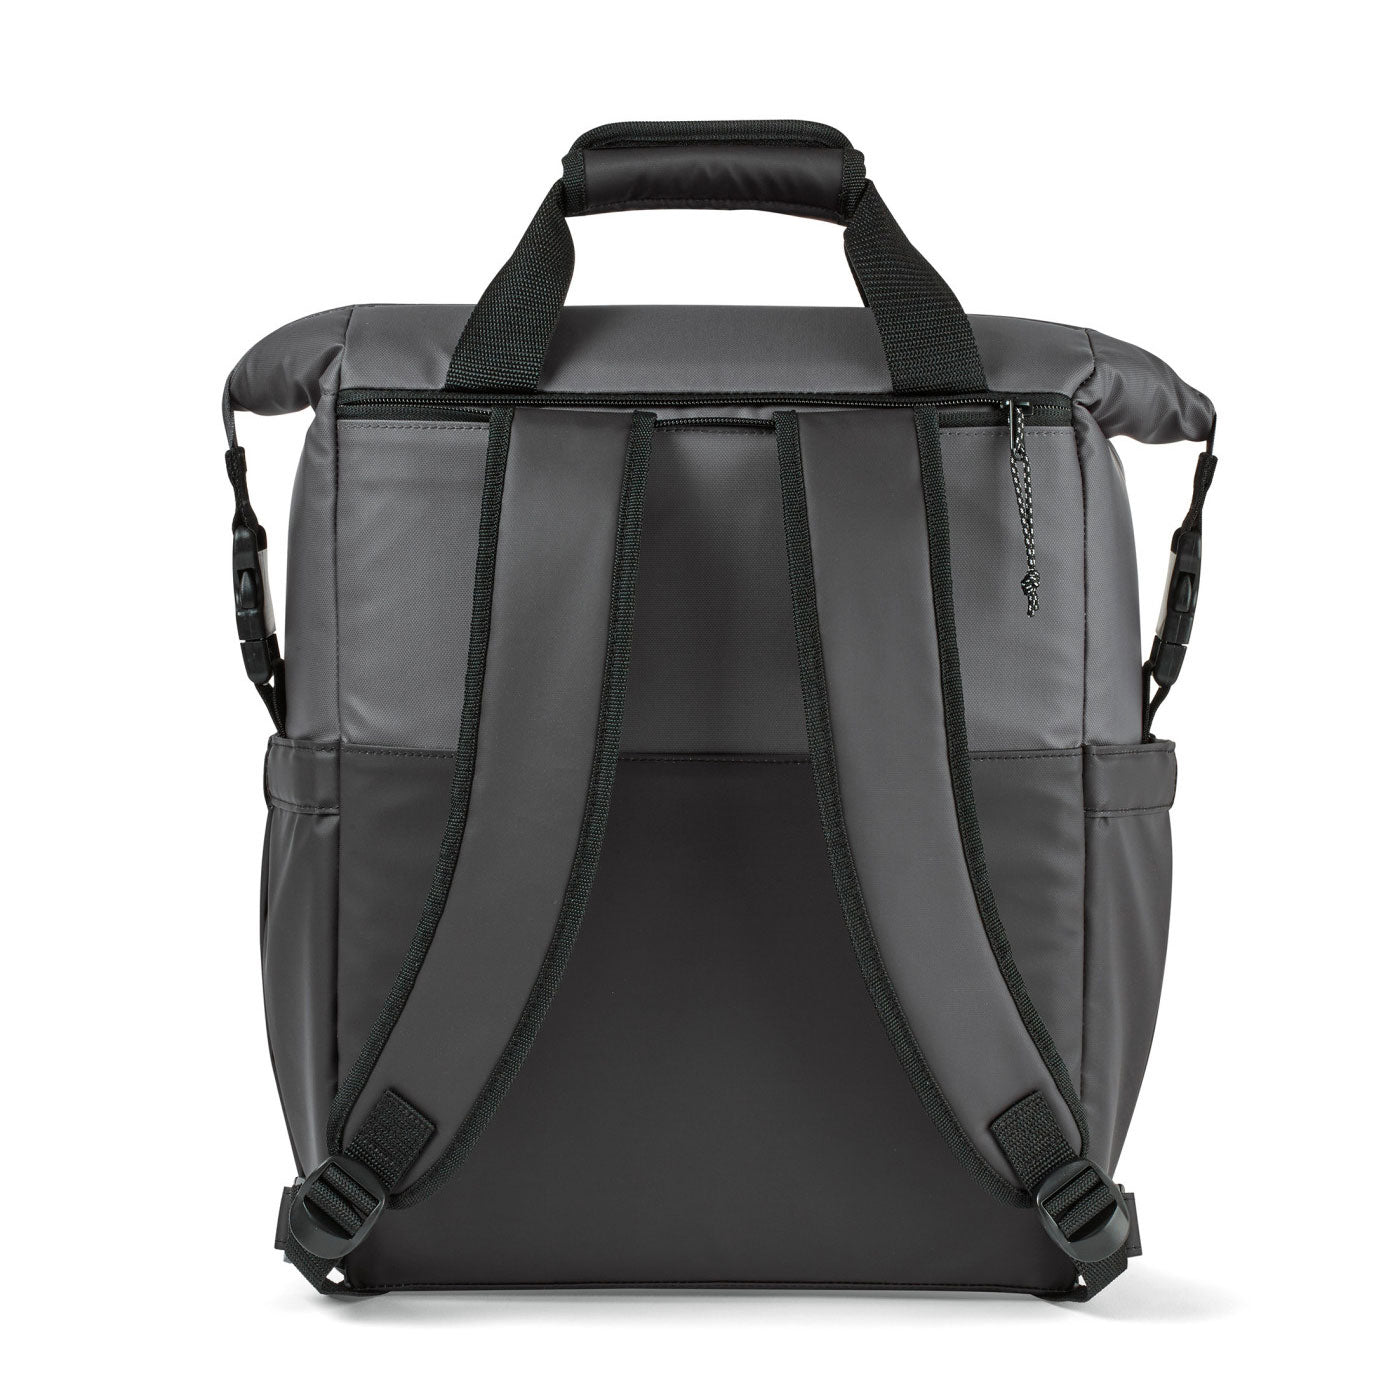 Igloo Seadrift Switch Customized Backpack Coolers, BlackGrey